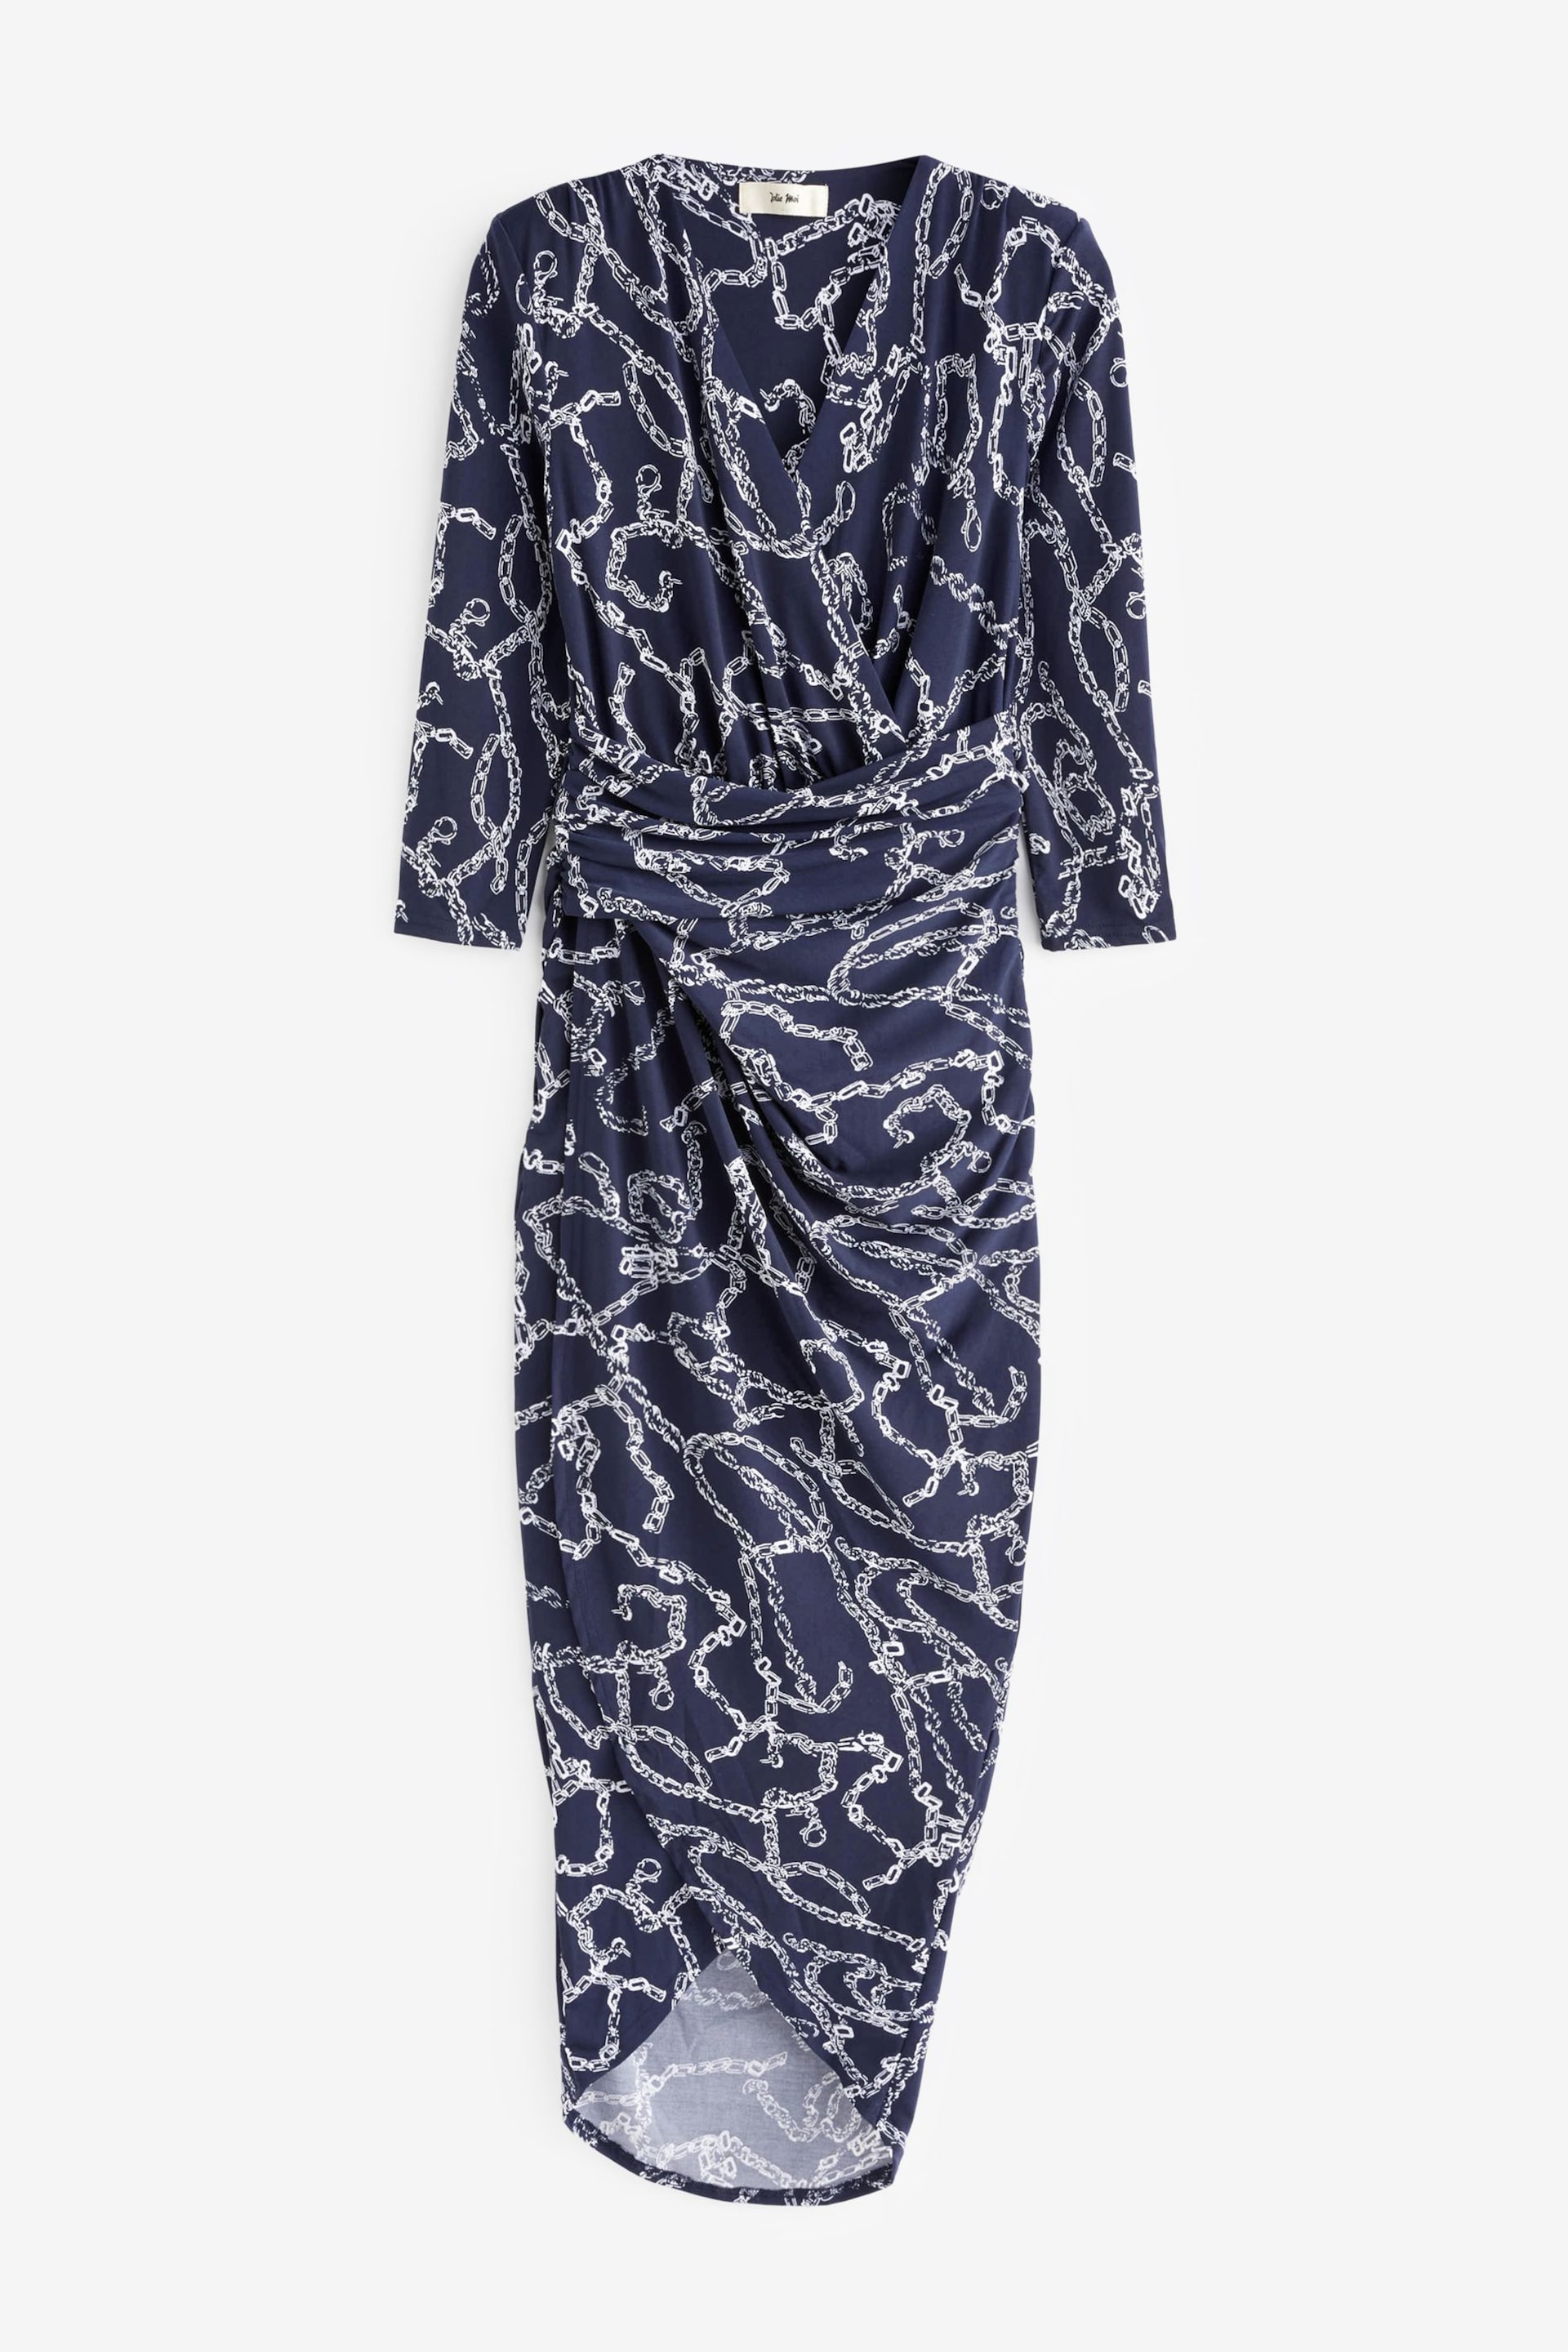 Jolie Moi Blue Print Wrap Front Bodycon Maxi Dress - Image 6 of 6